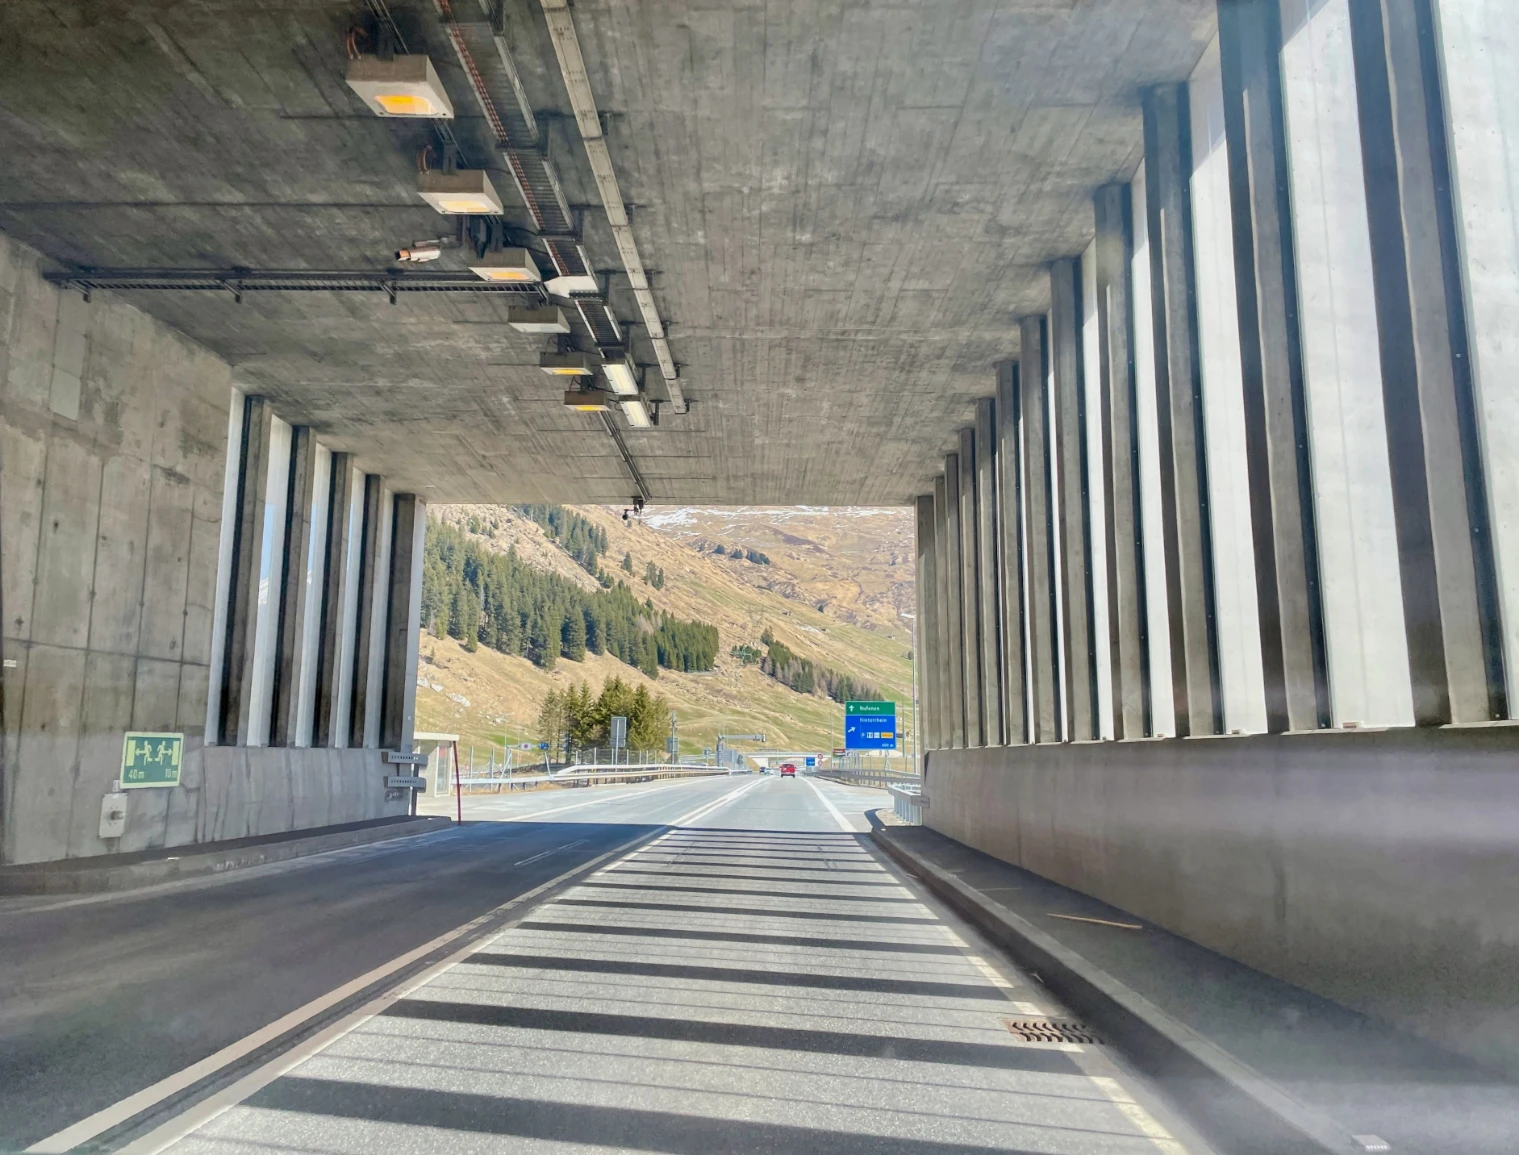 Nighttime closure of the San Bernardino tunnel in Switzerland